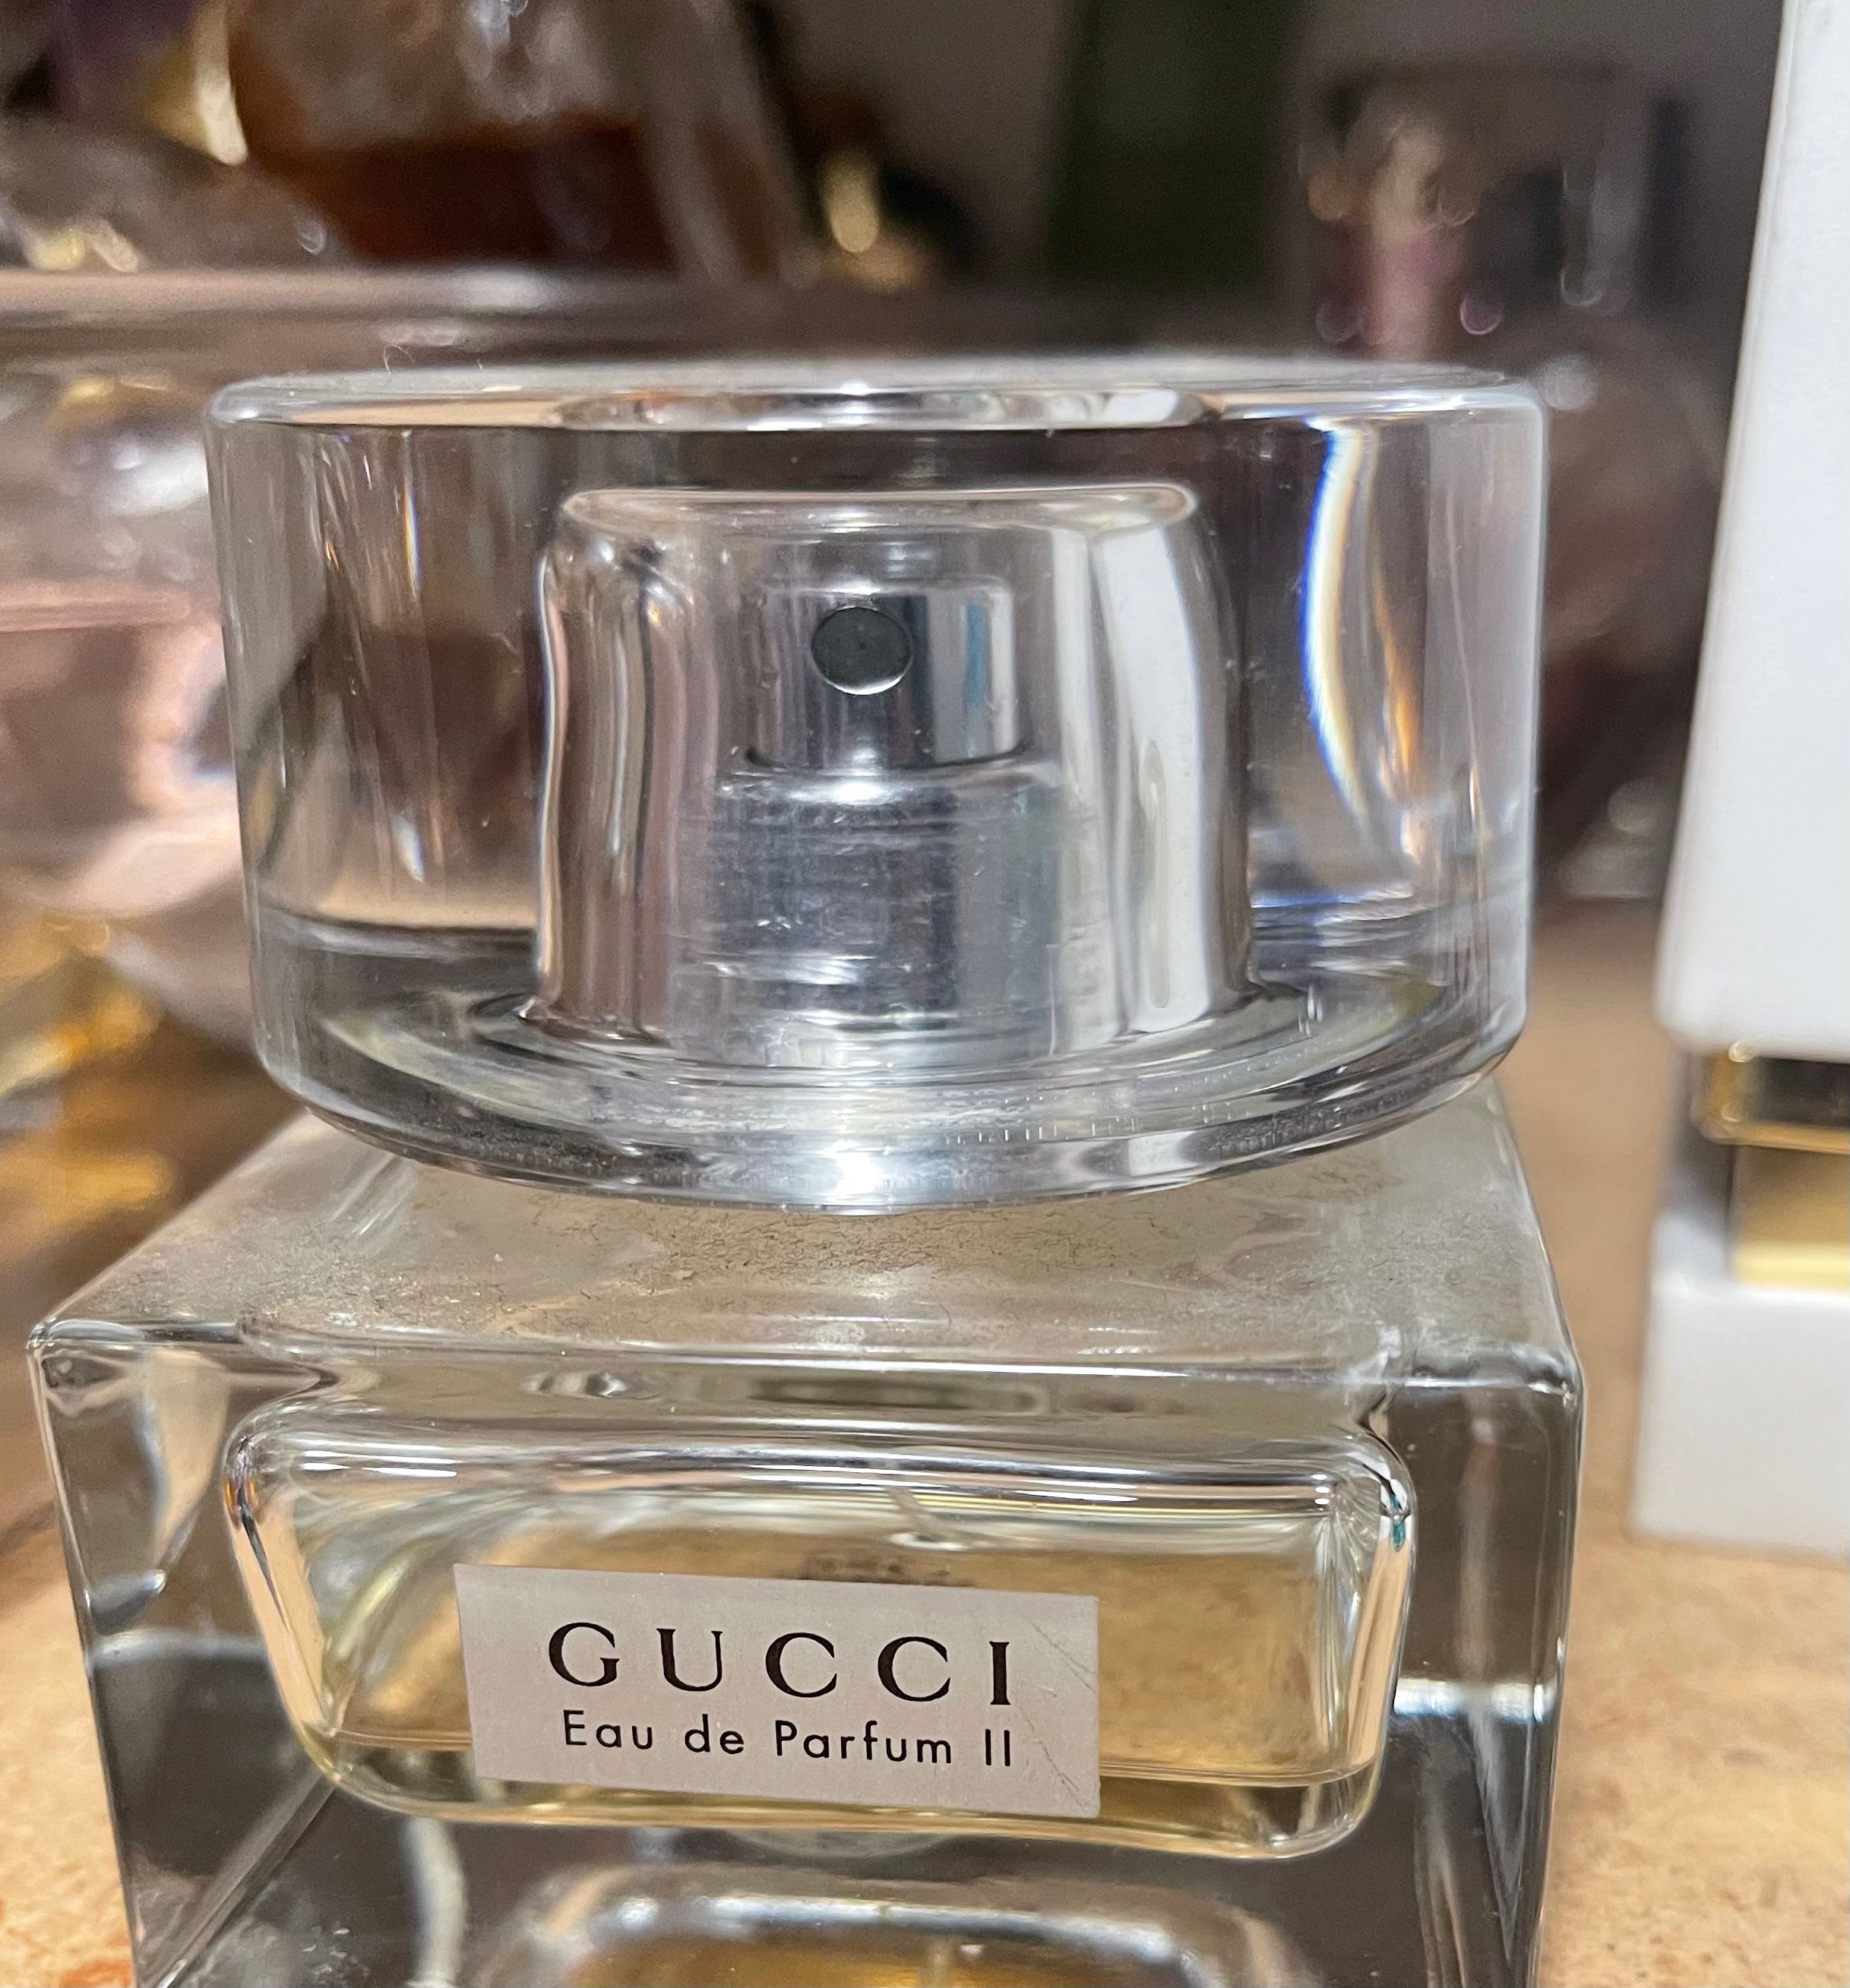 Gucci Eau de Parfume II - Beauty Insider Community